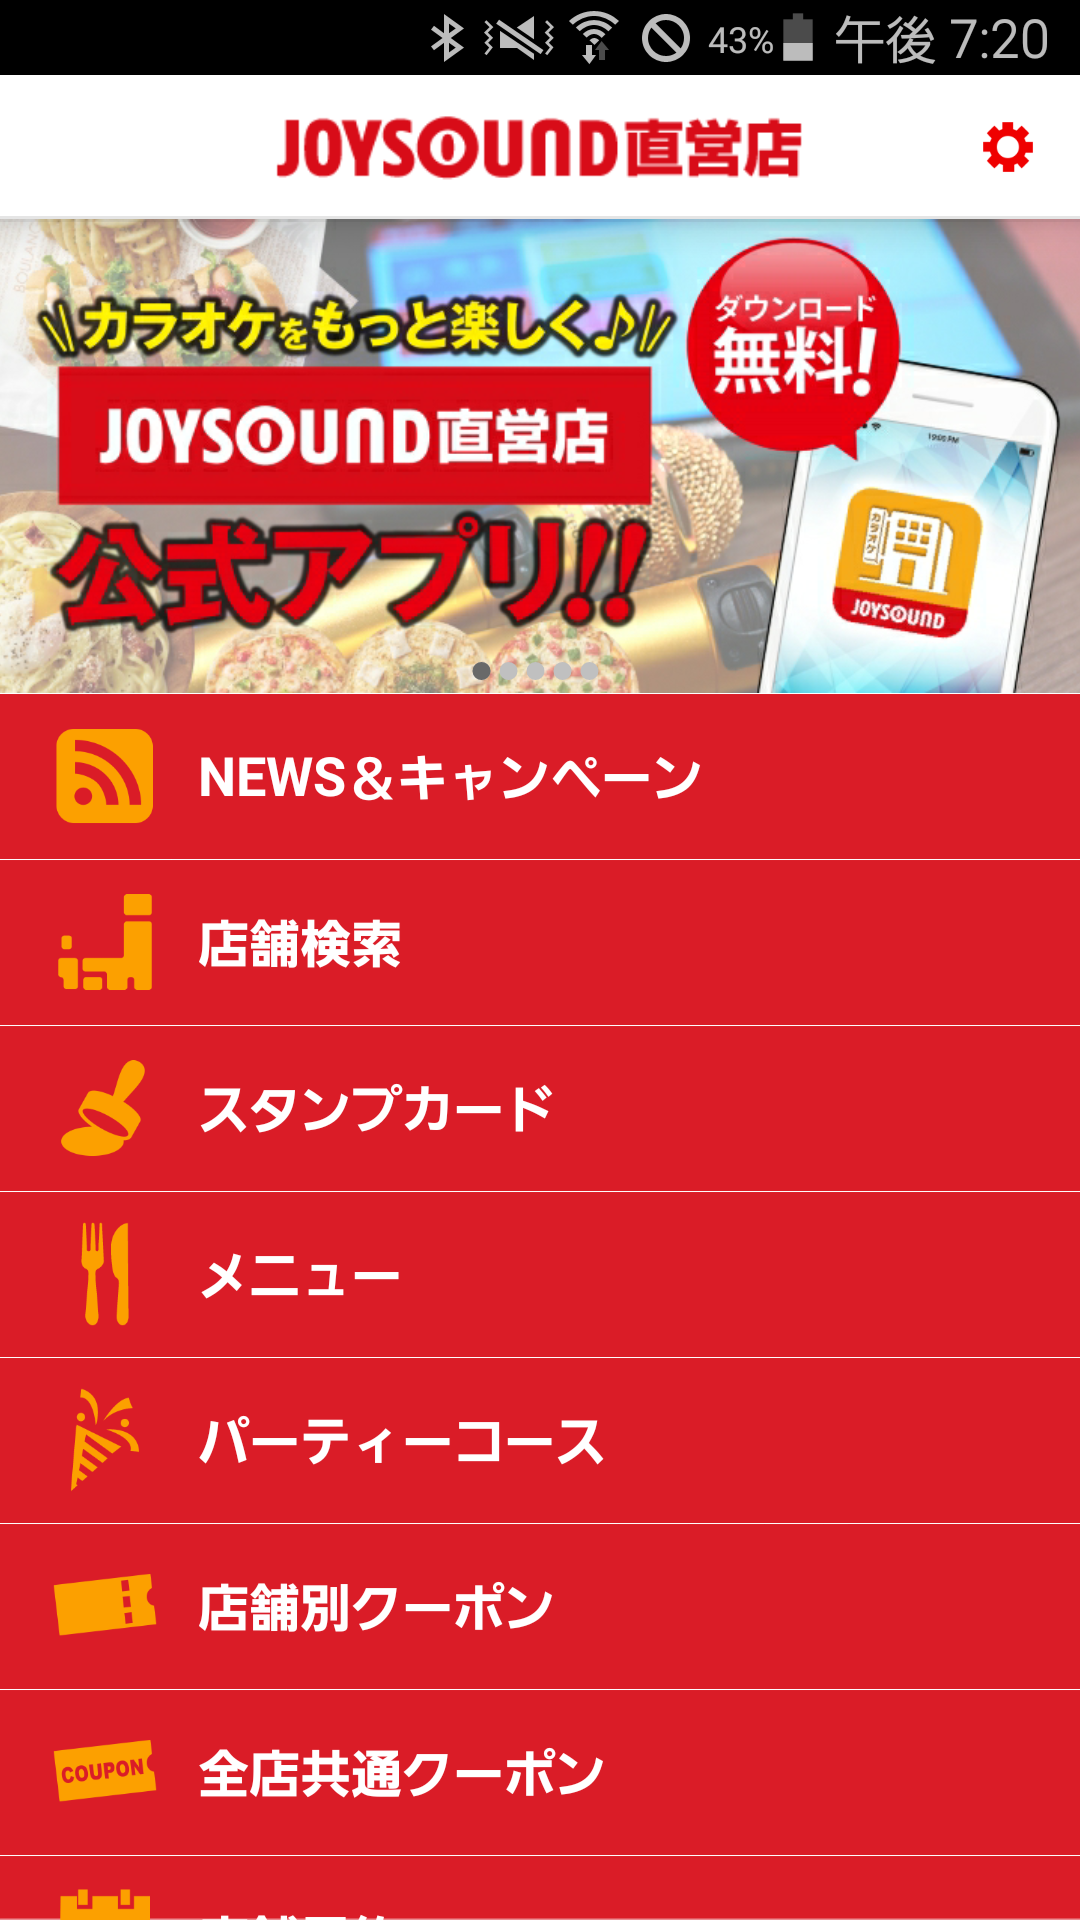 Android application JOYSOUND直営店 公式アプリ│インストールで会員料金に screenshort